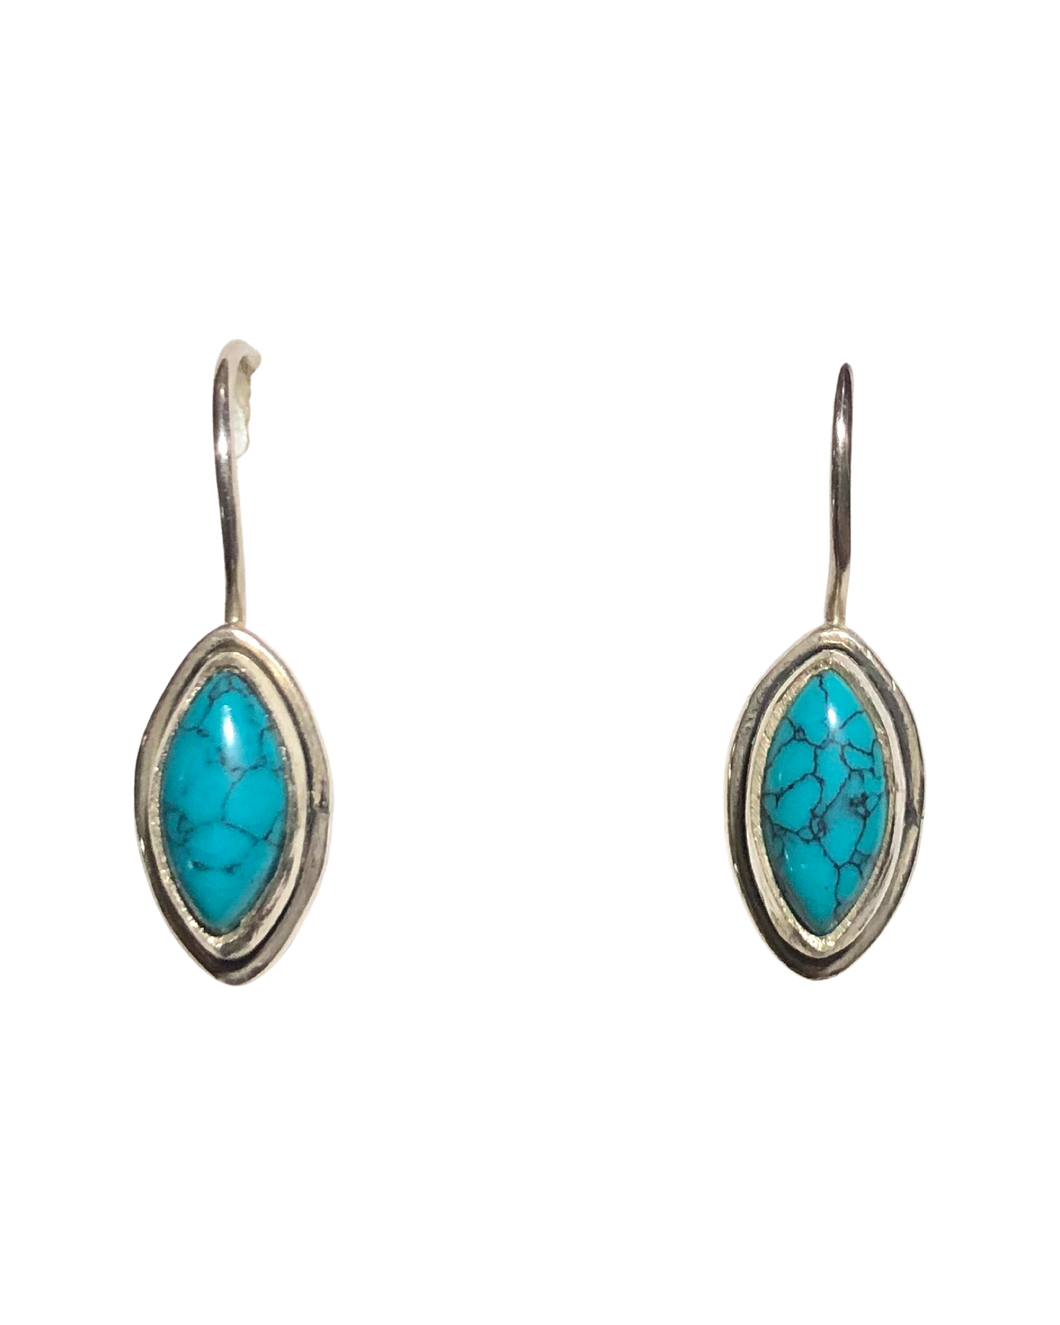 Turquoise Sterling Silver Earrings   (E39)